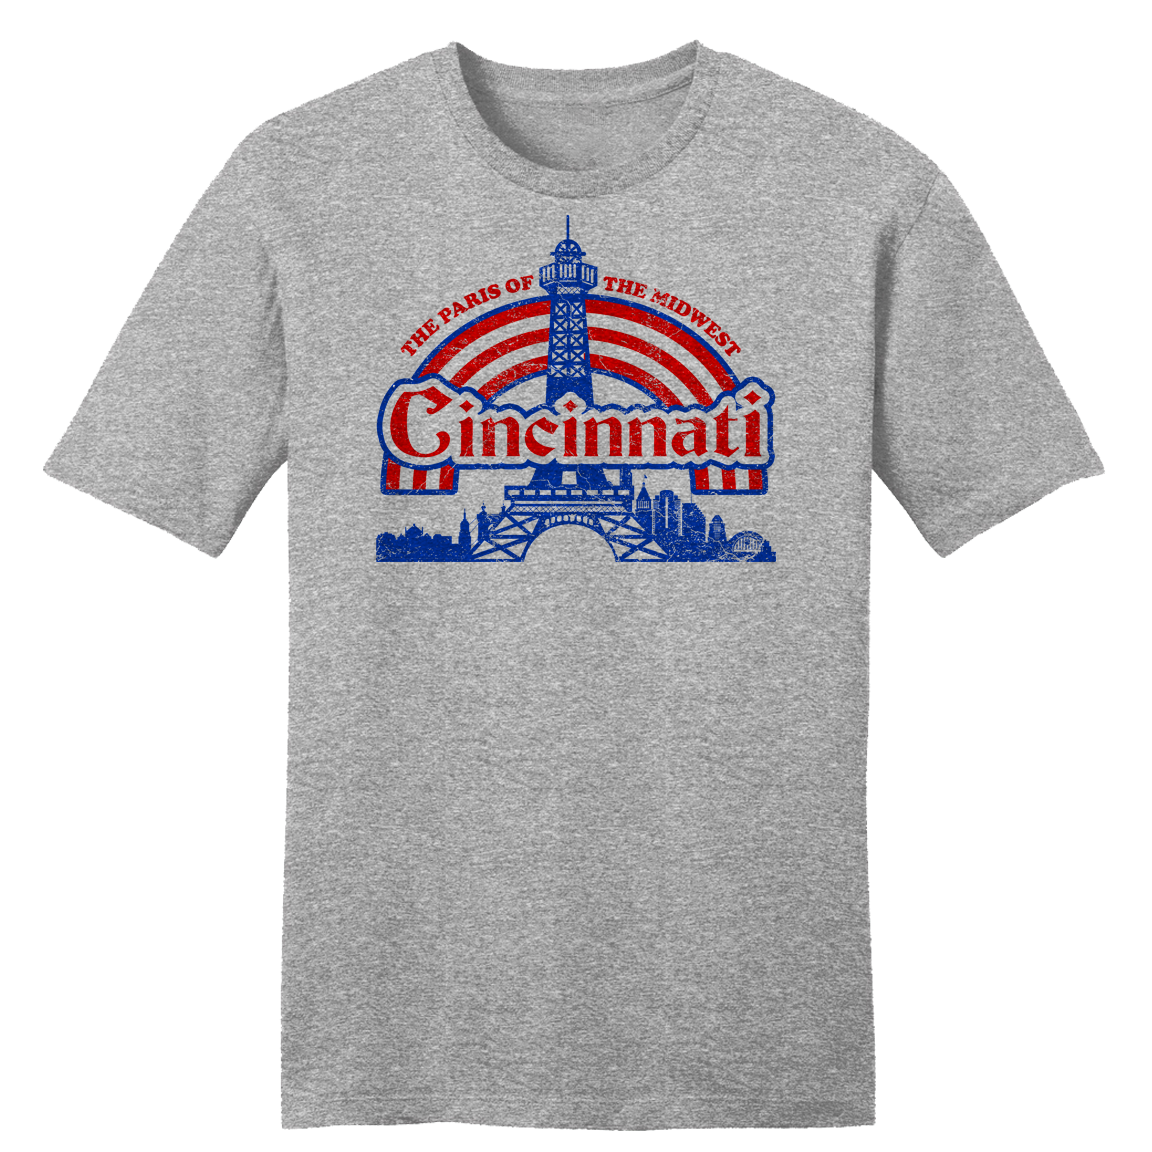 Cincinnati "Paris of the Midwest" - Cincy Shirts